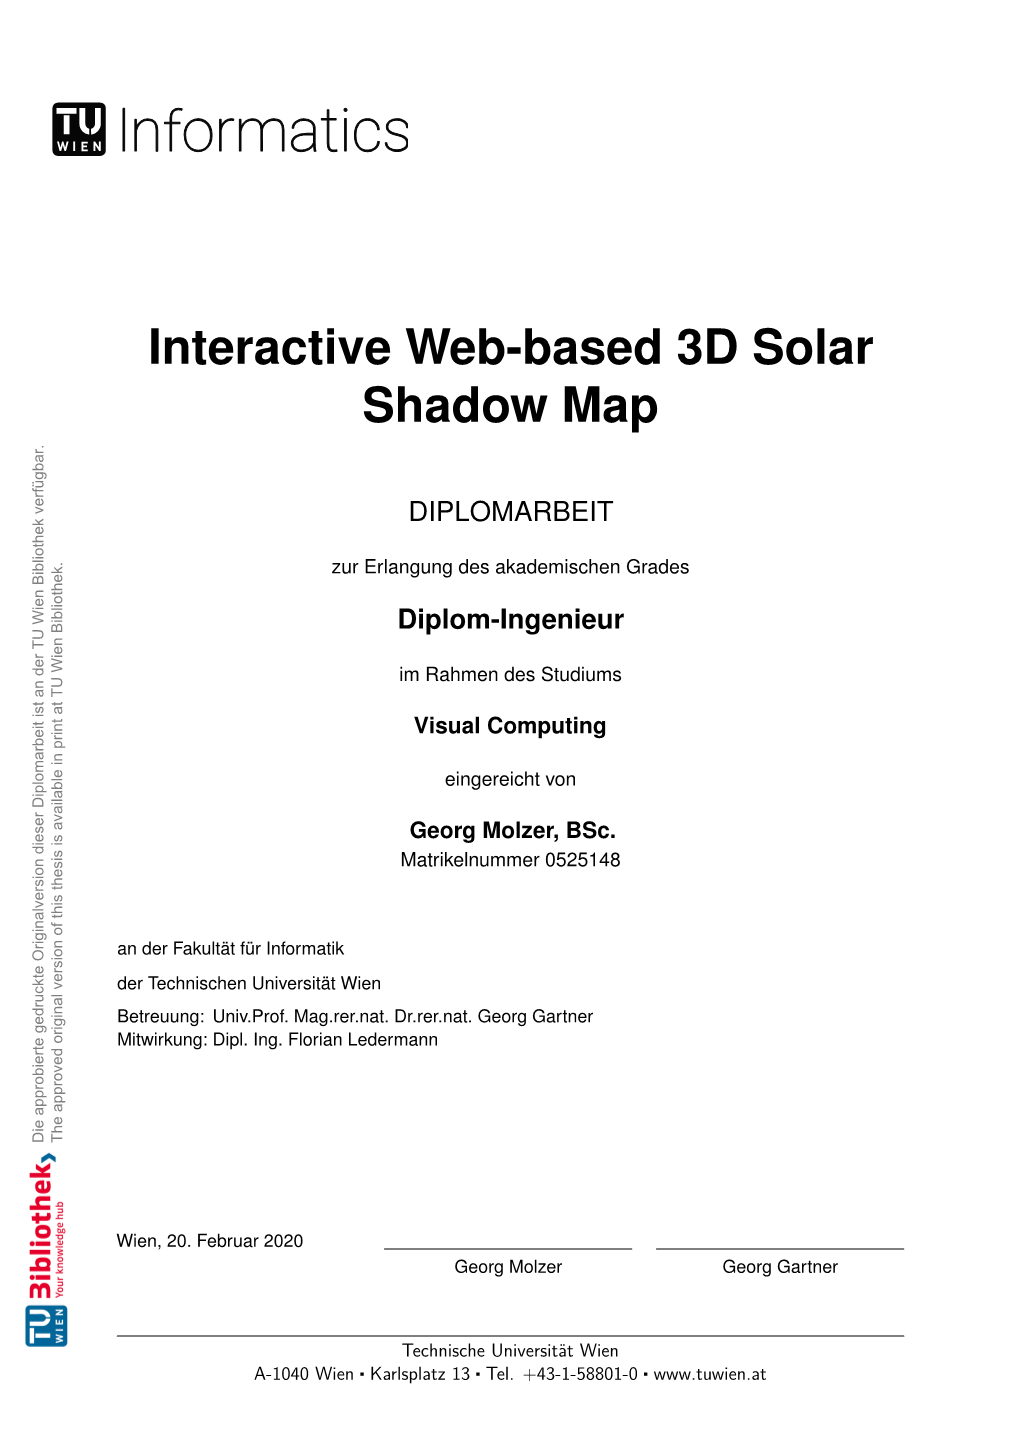 Interactive Web-Based 3D Solar Shadow